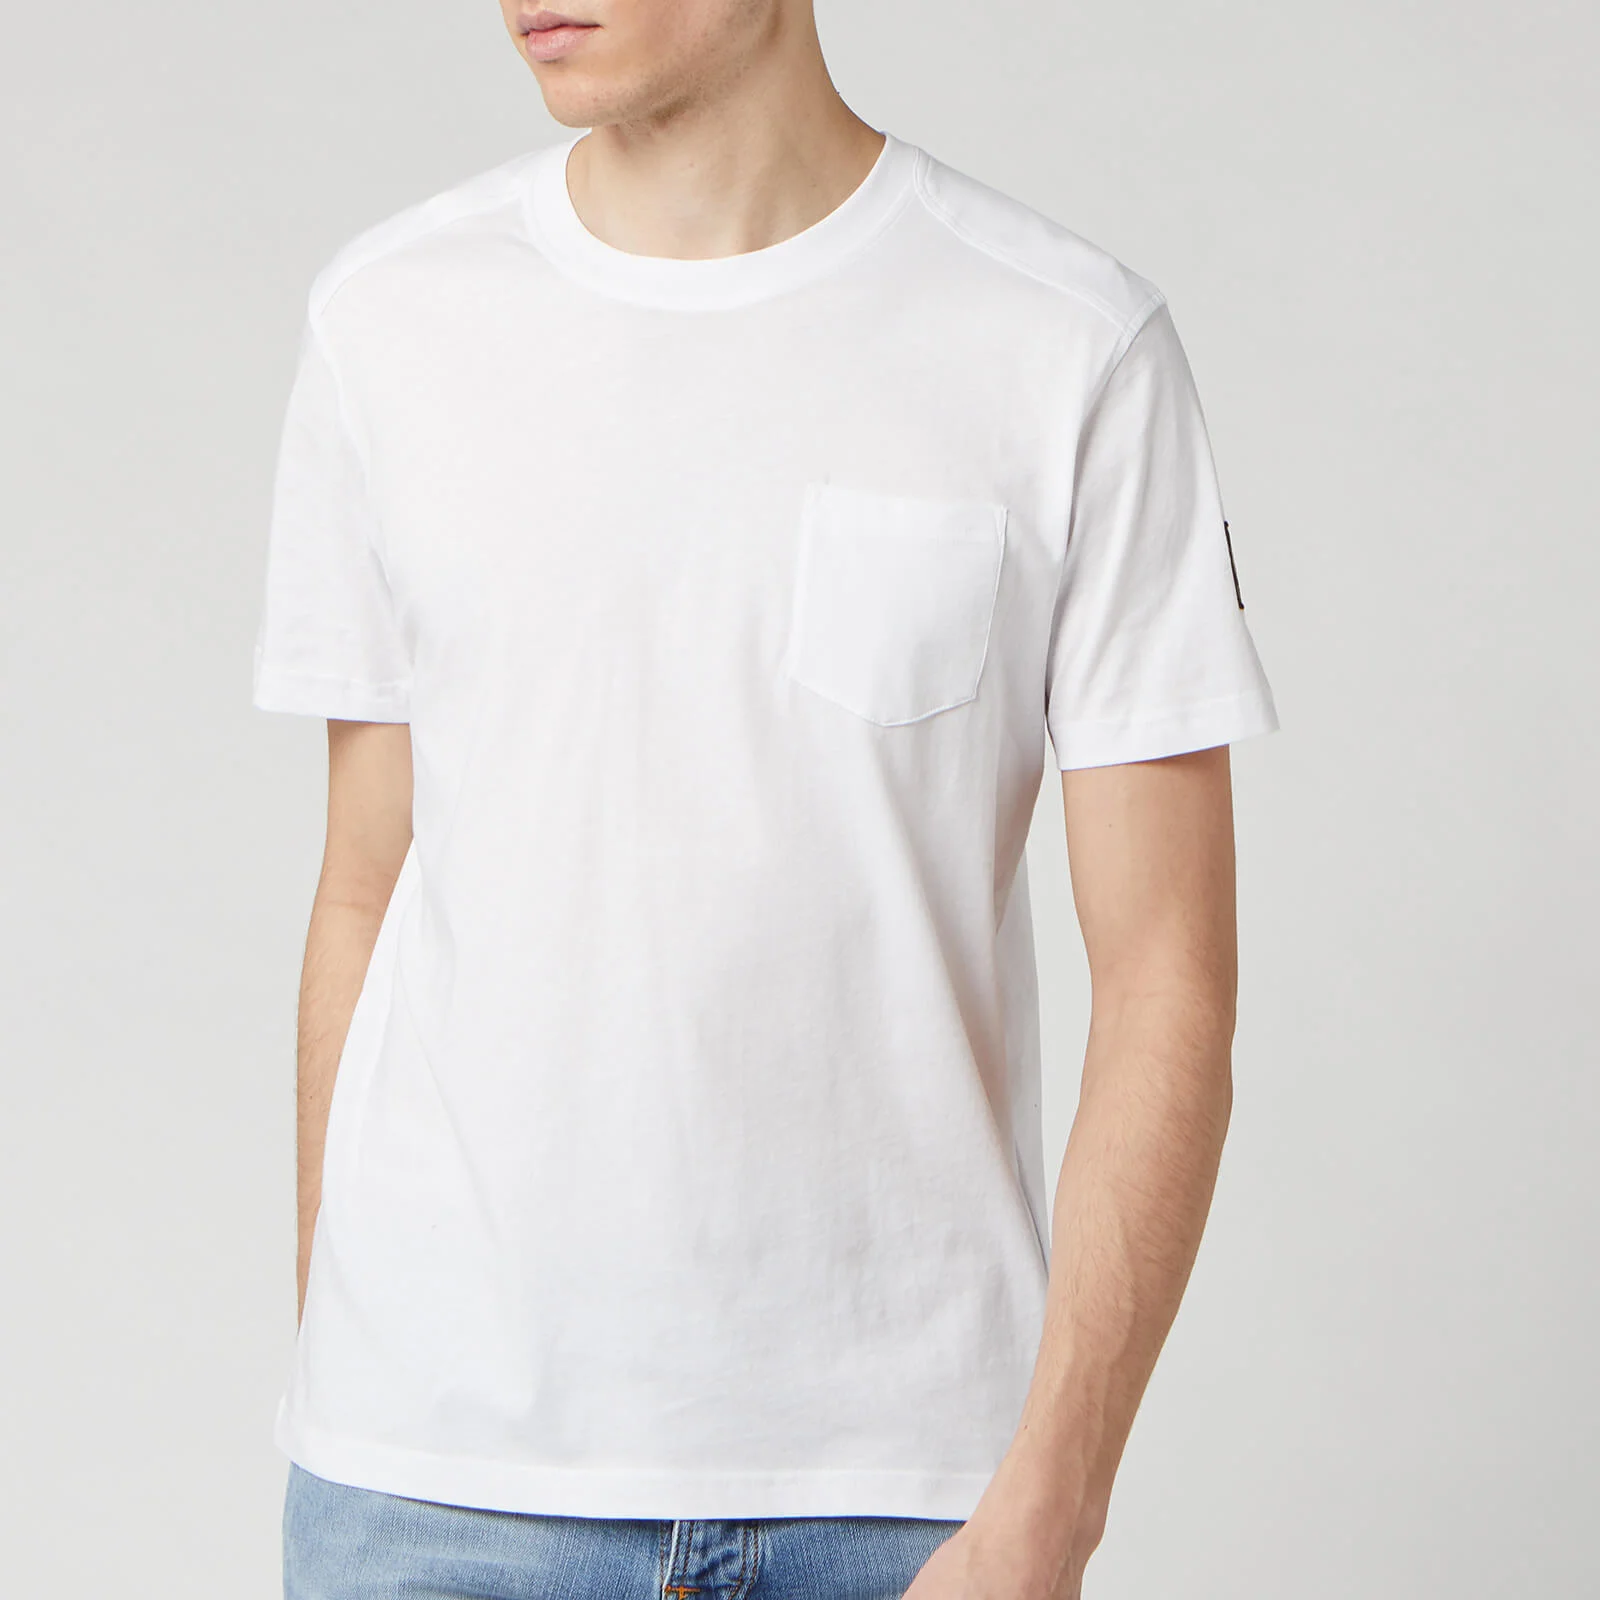 Belstaff Men's Thom T-Shirt - White Image 1